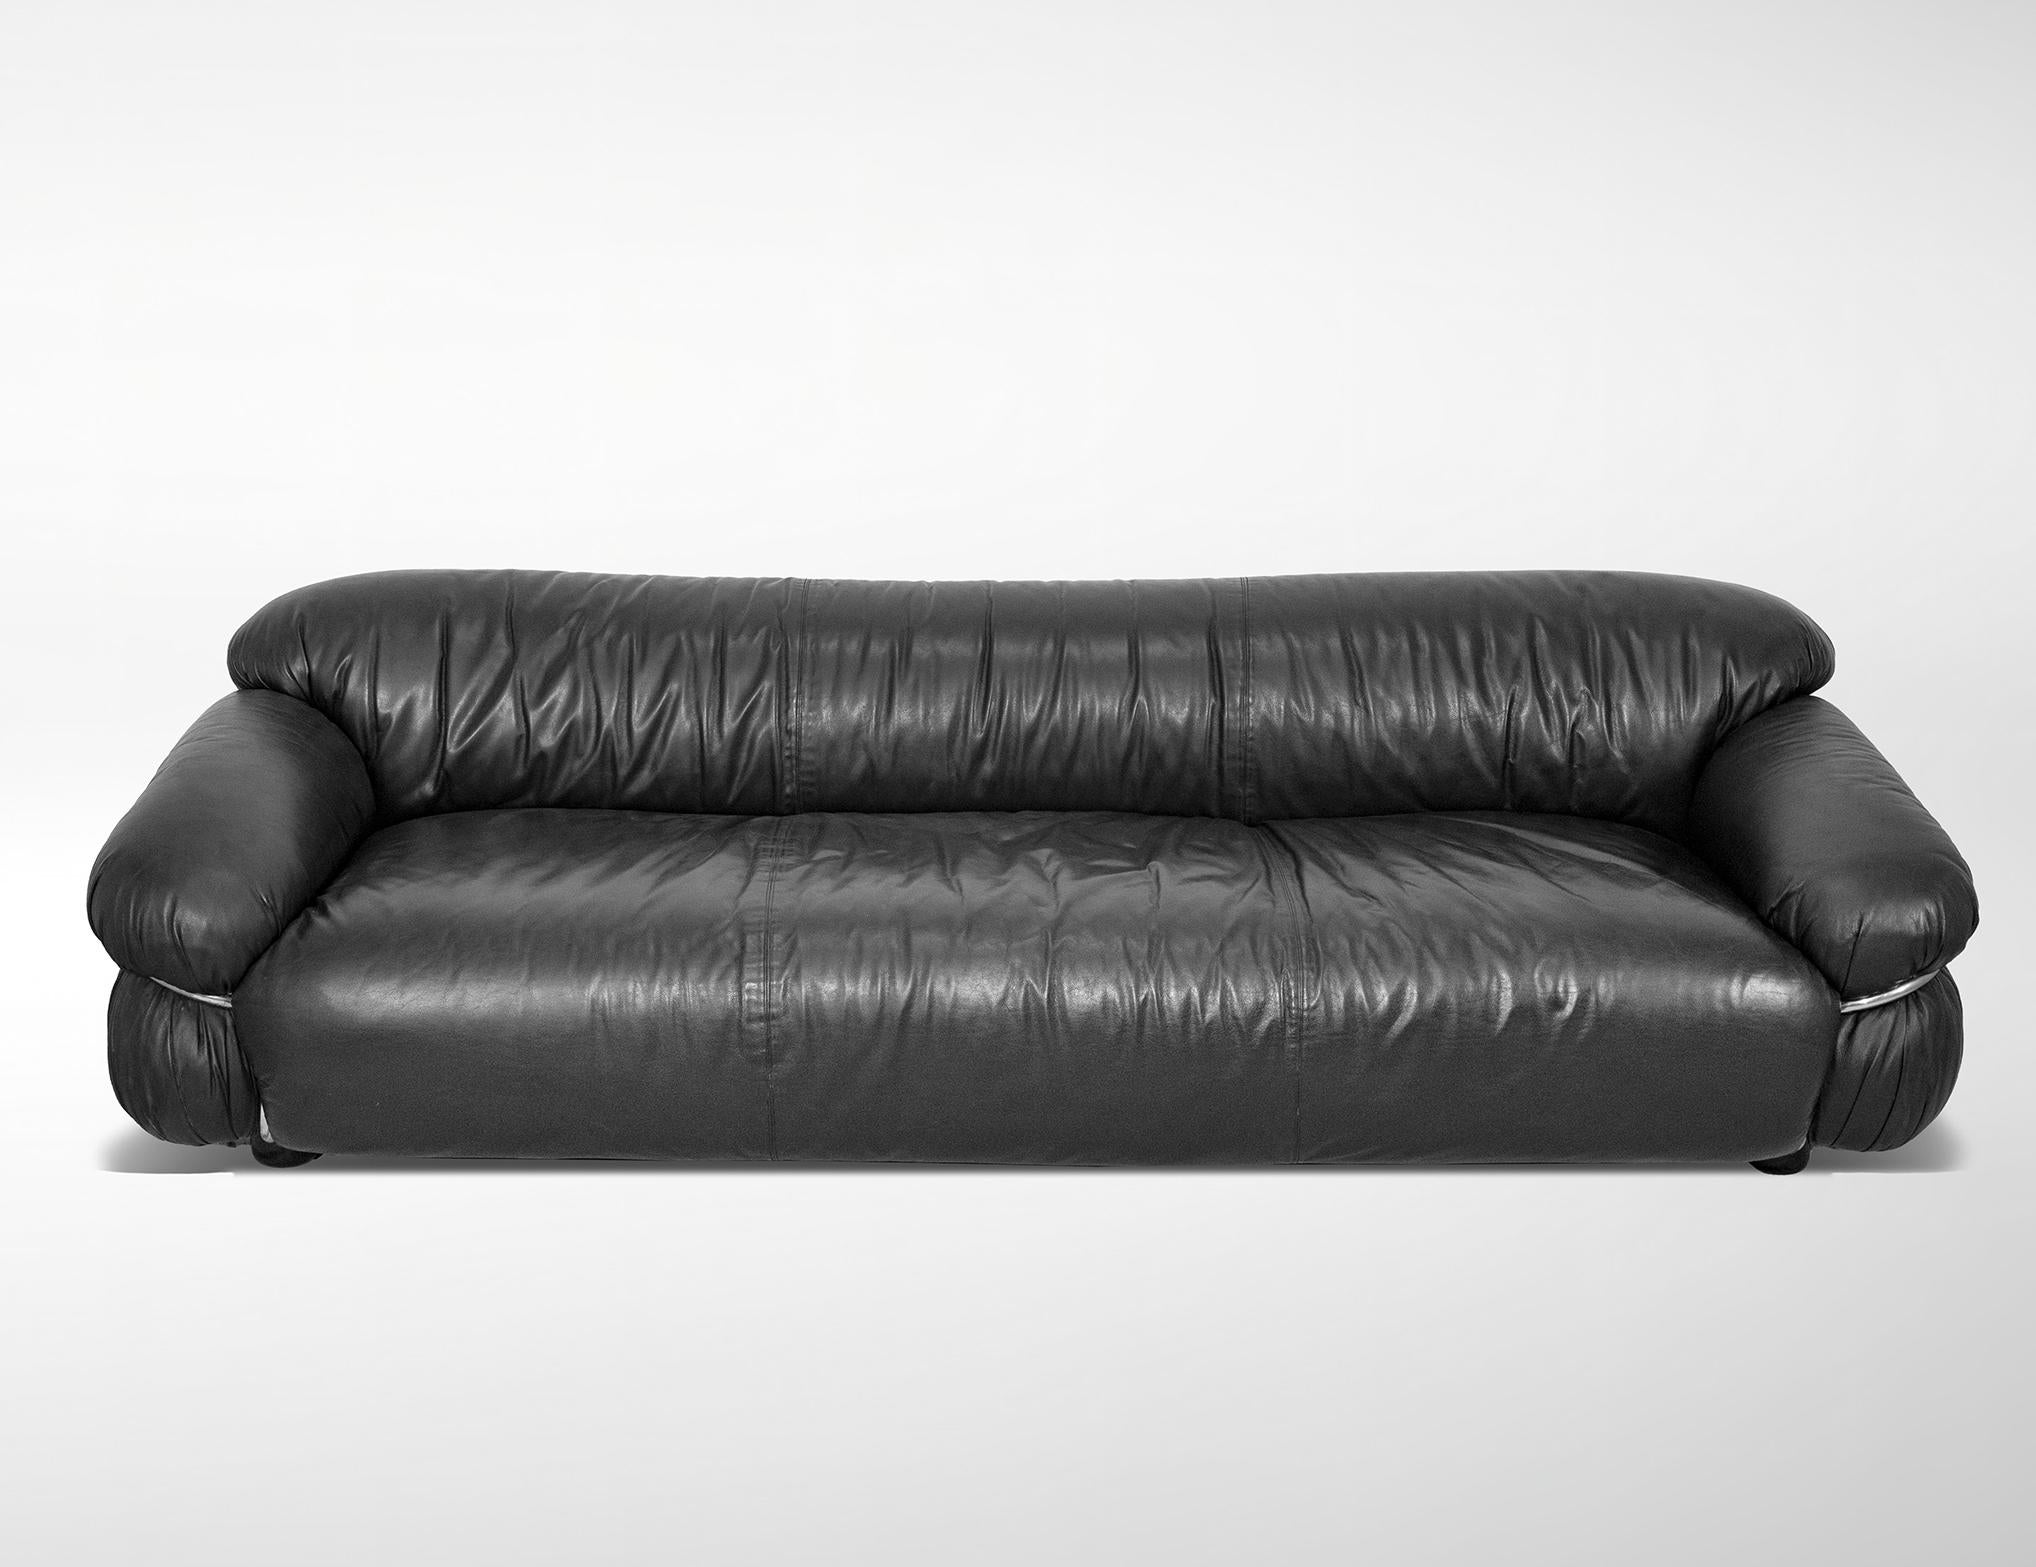 Three seater sofa designed by Gianfranco Frattini for Cassina, 1969.
Original manufacturer's label.
Black Leather, excellent condition.
Ref. Giuliana Gramigna, 